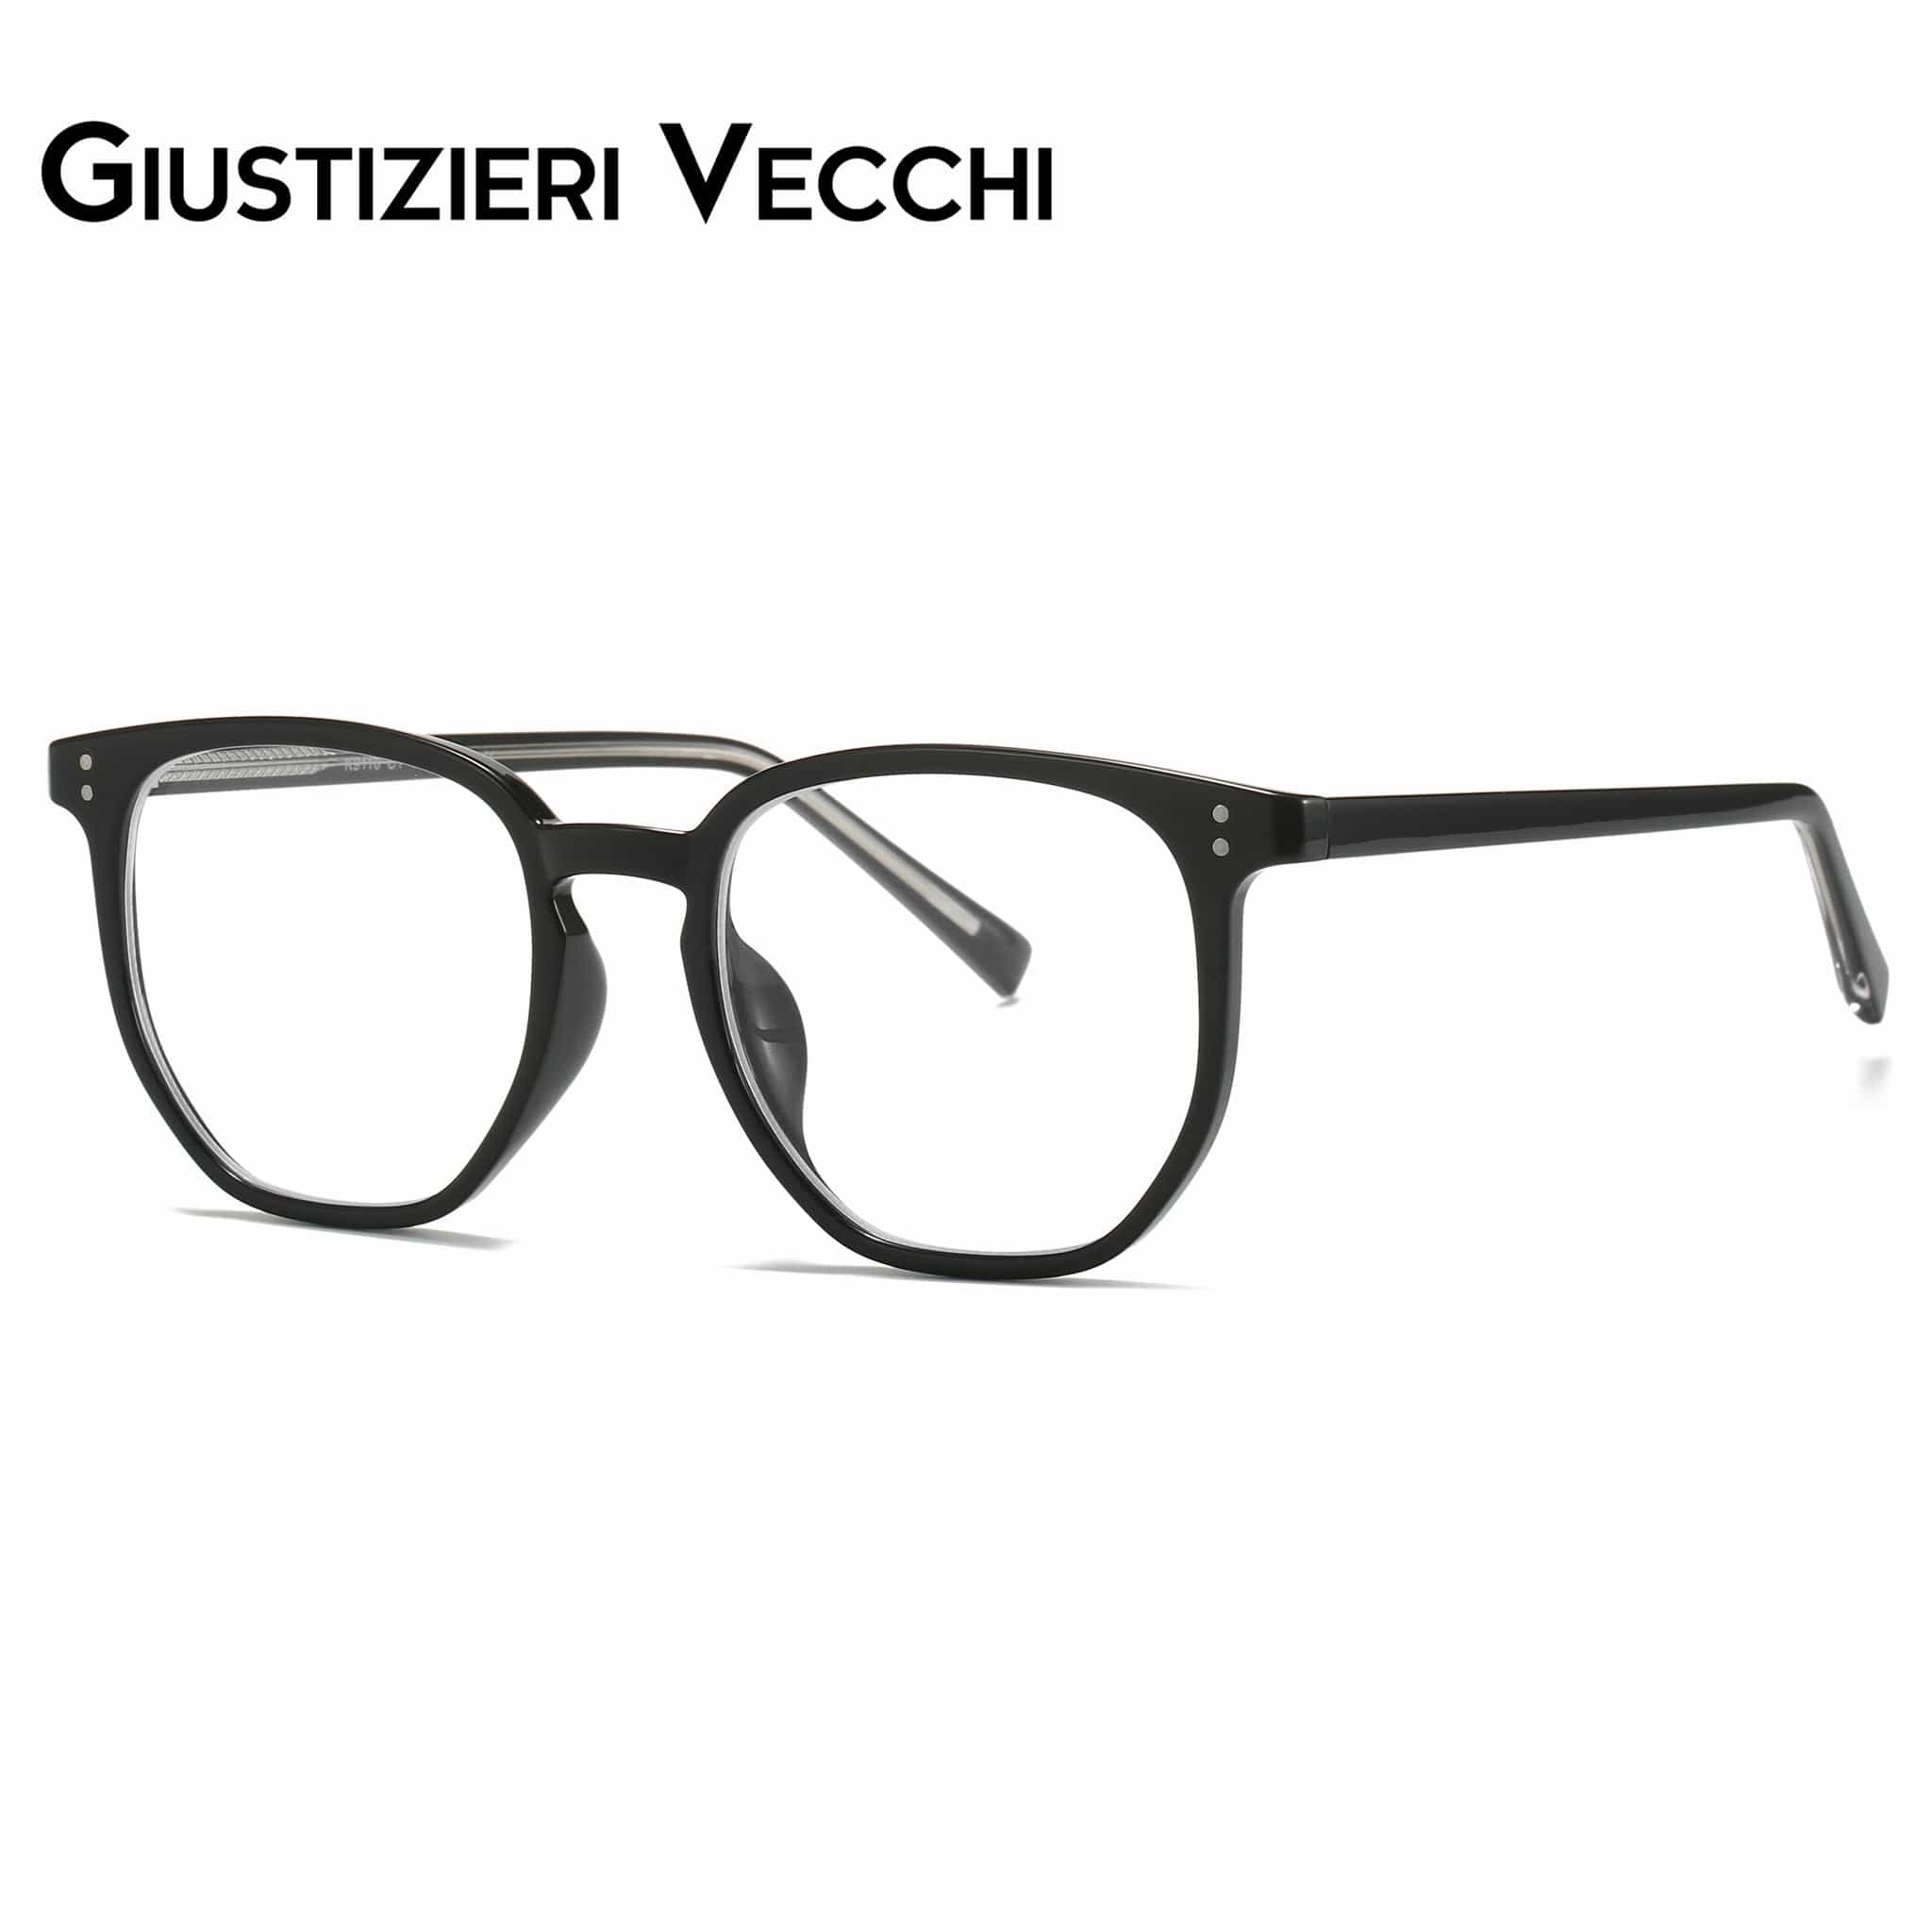 GIUSTIZIERI VECCHI Eyeglasses Venezia Vista Uno